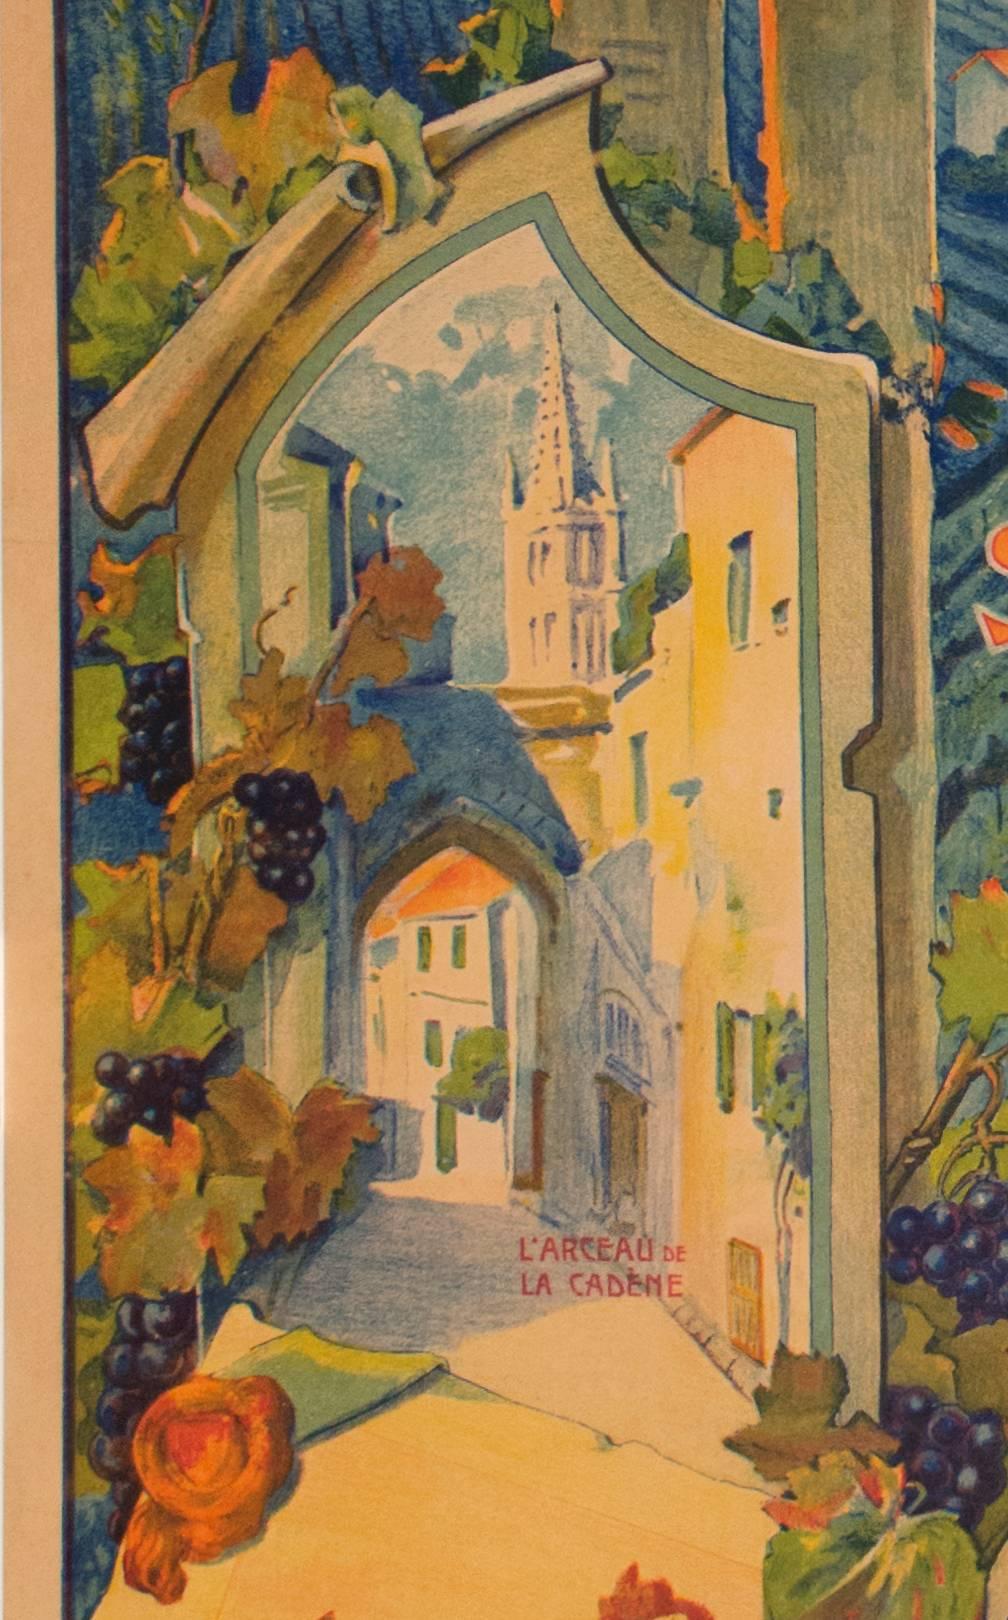 Paper Original Antique French Travel Poster for St Emilion Wine Region by Hazeryon